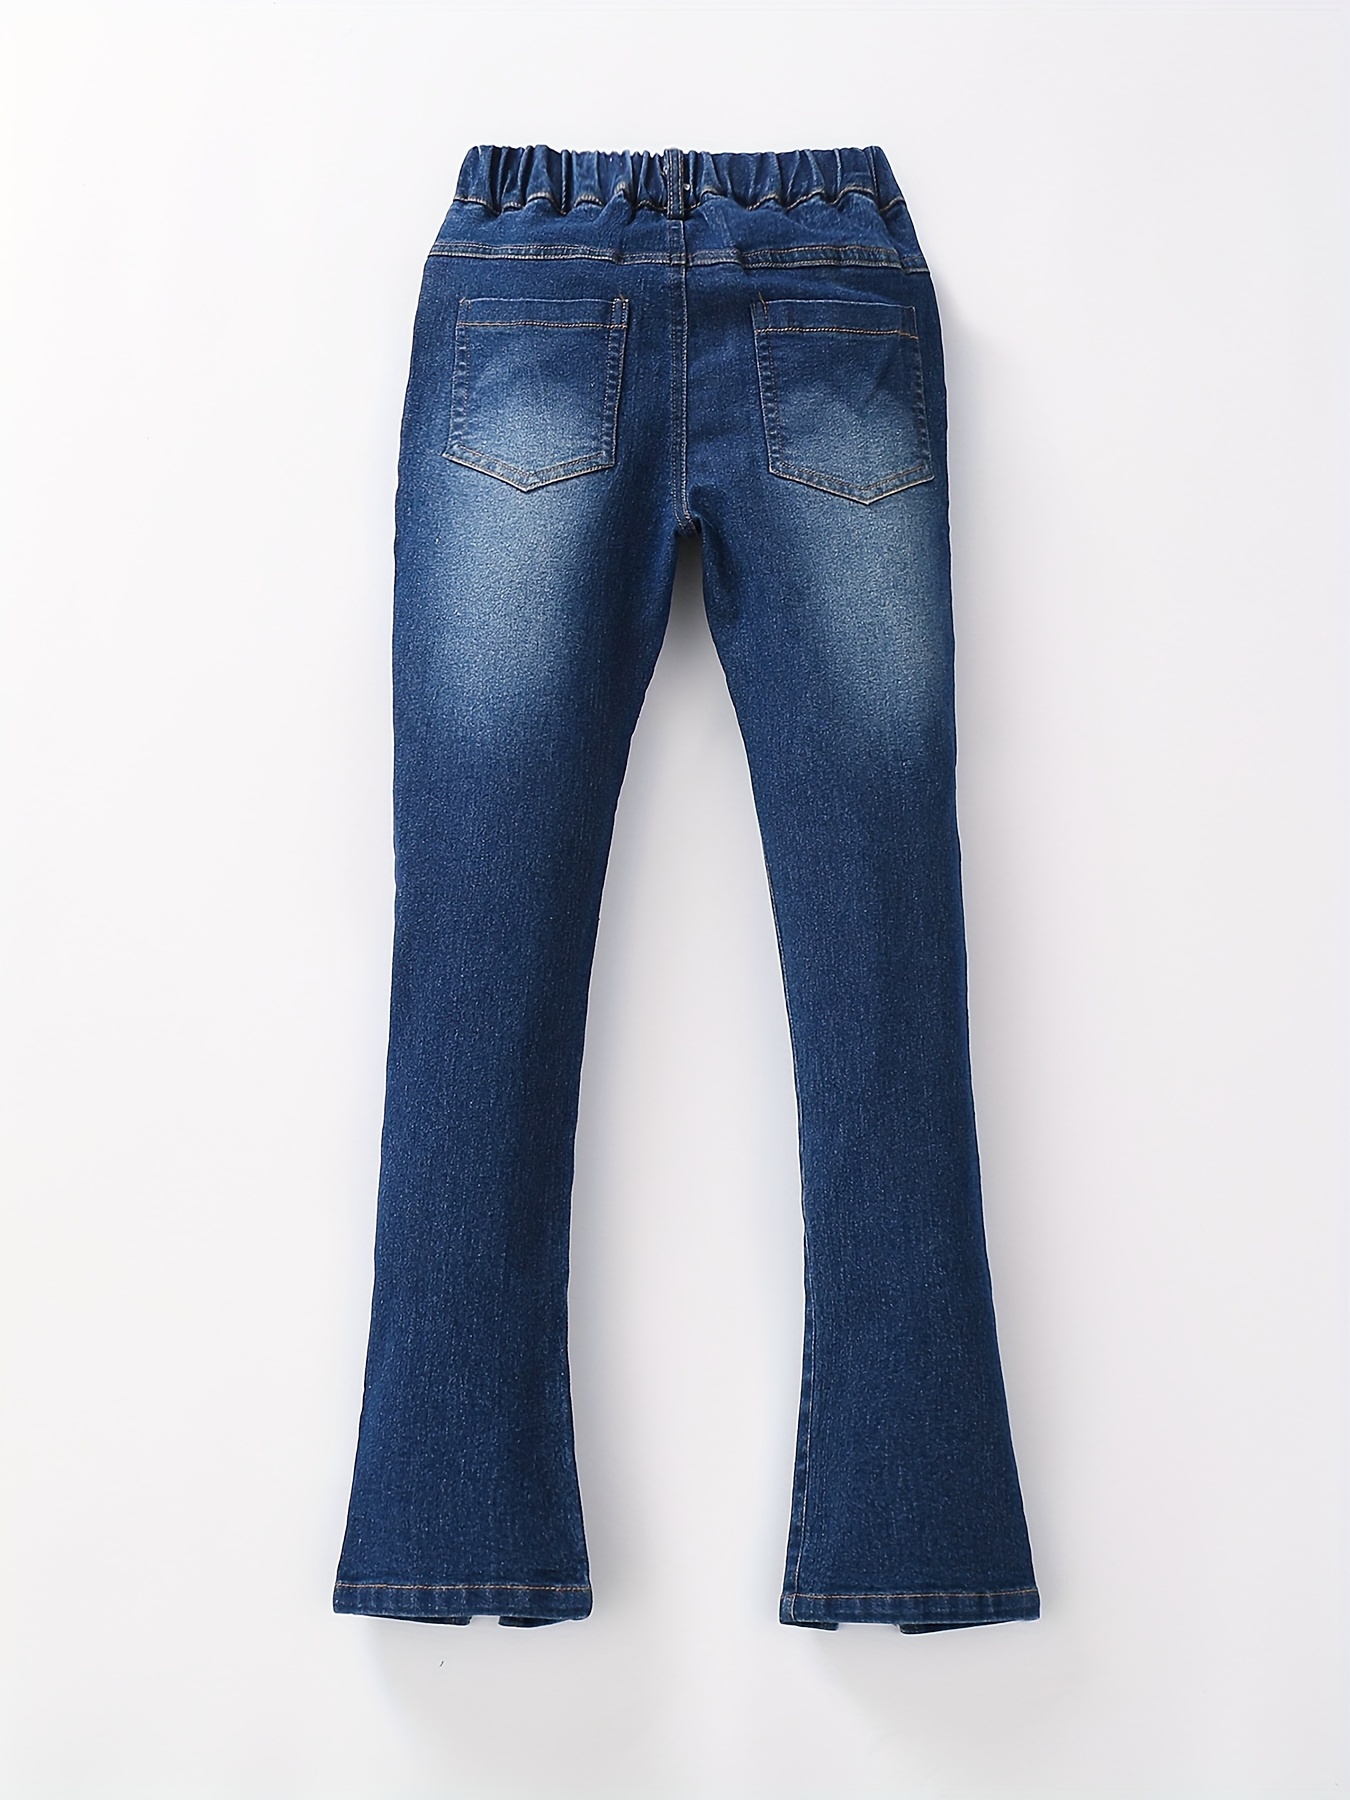 Women Denim Bell Bottom Jeans Good Stretchy Super Comfy Pants